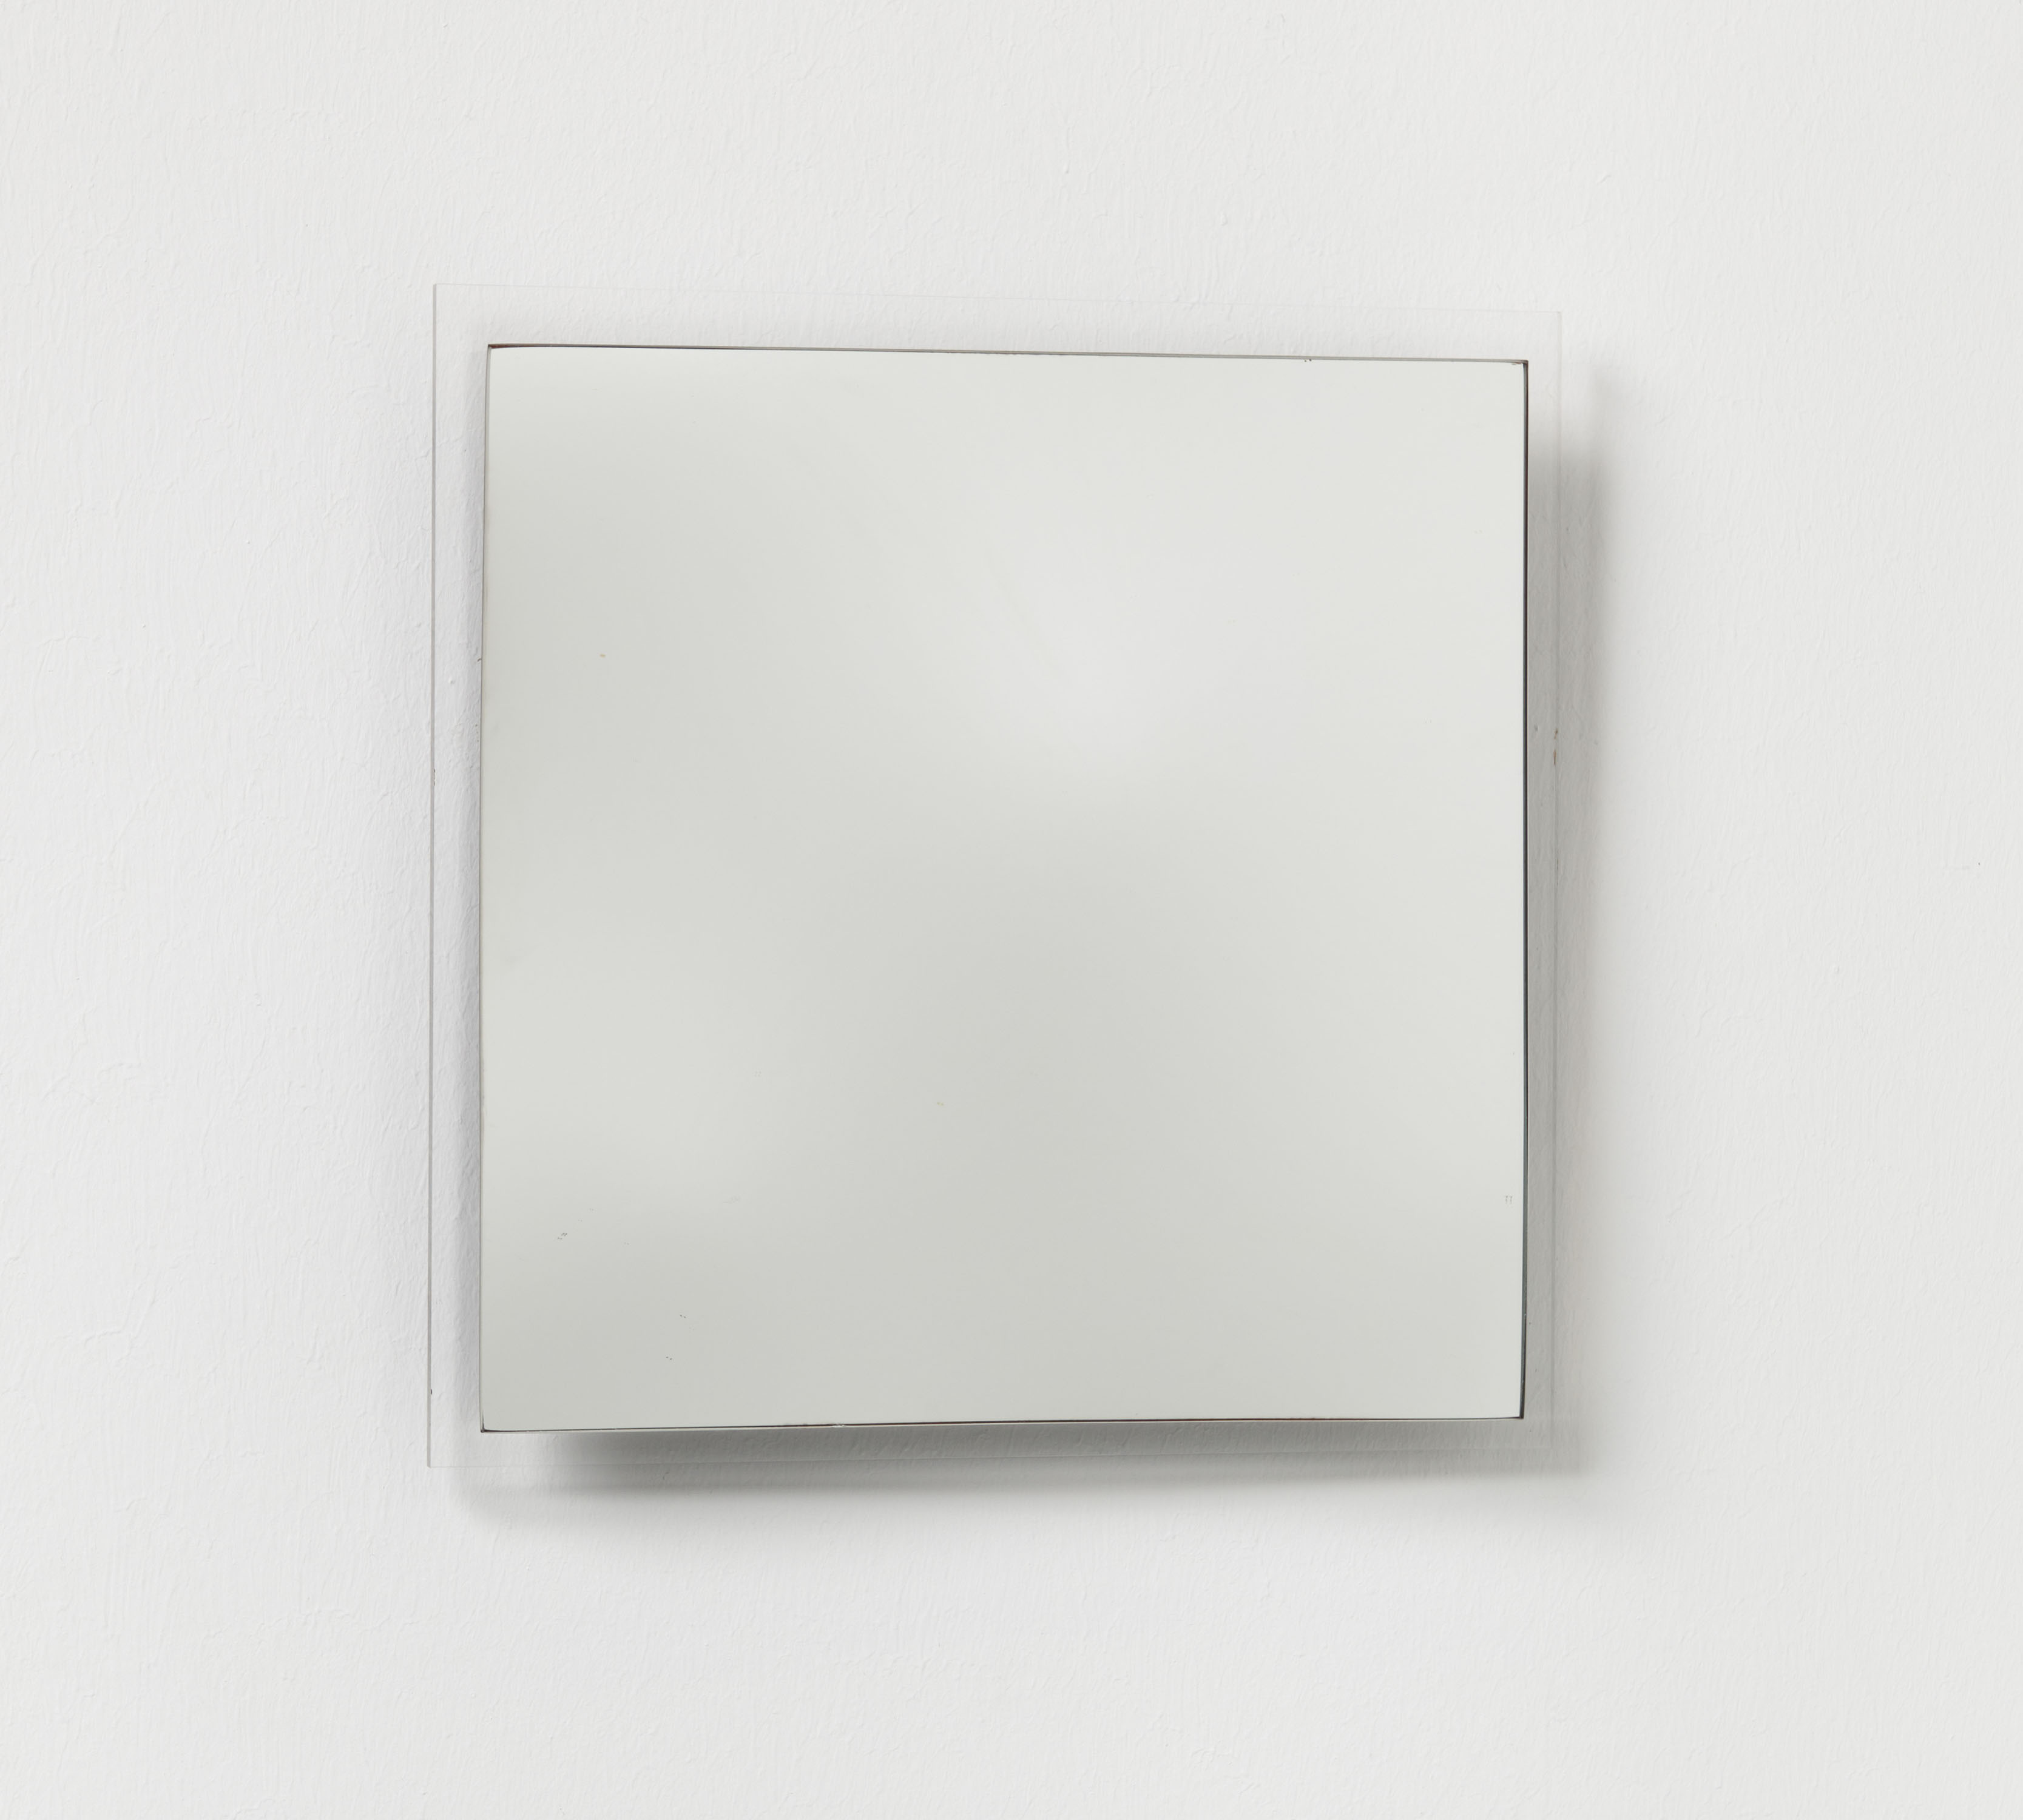 Victor Bonato - Goslar-Konvex glas-spiegel-verformung, 73425-4, Van Ham Kunstauktionen